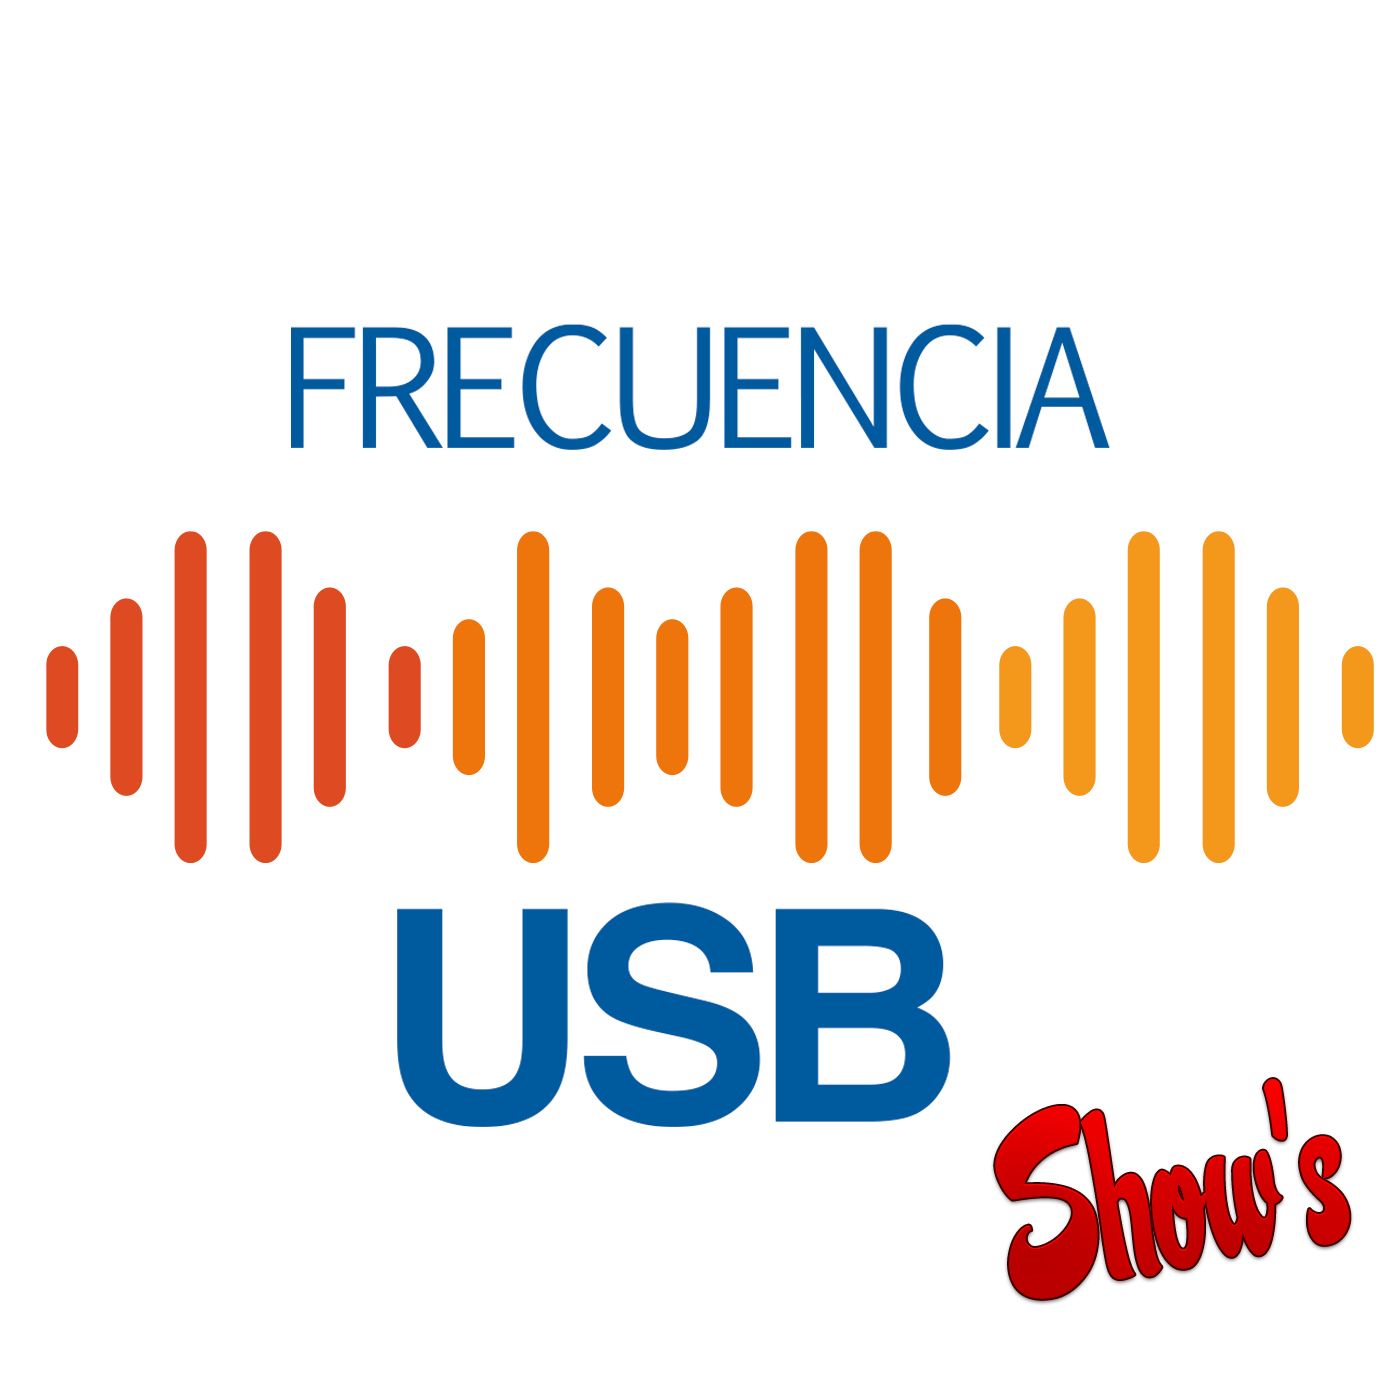 Frecuencia USB's show